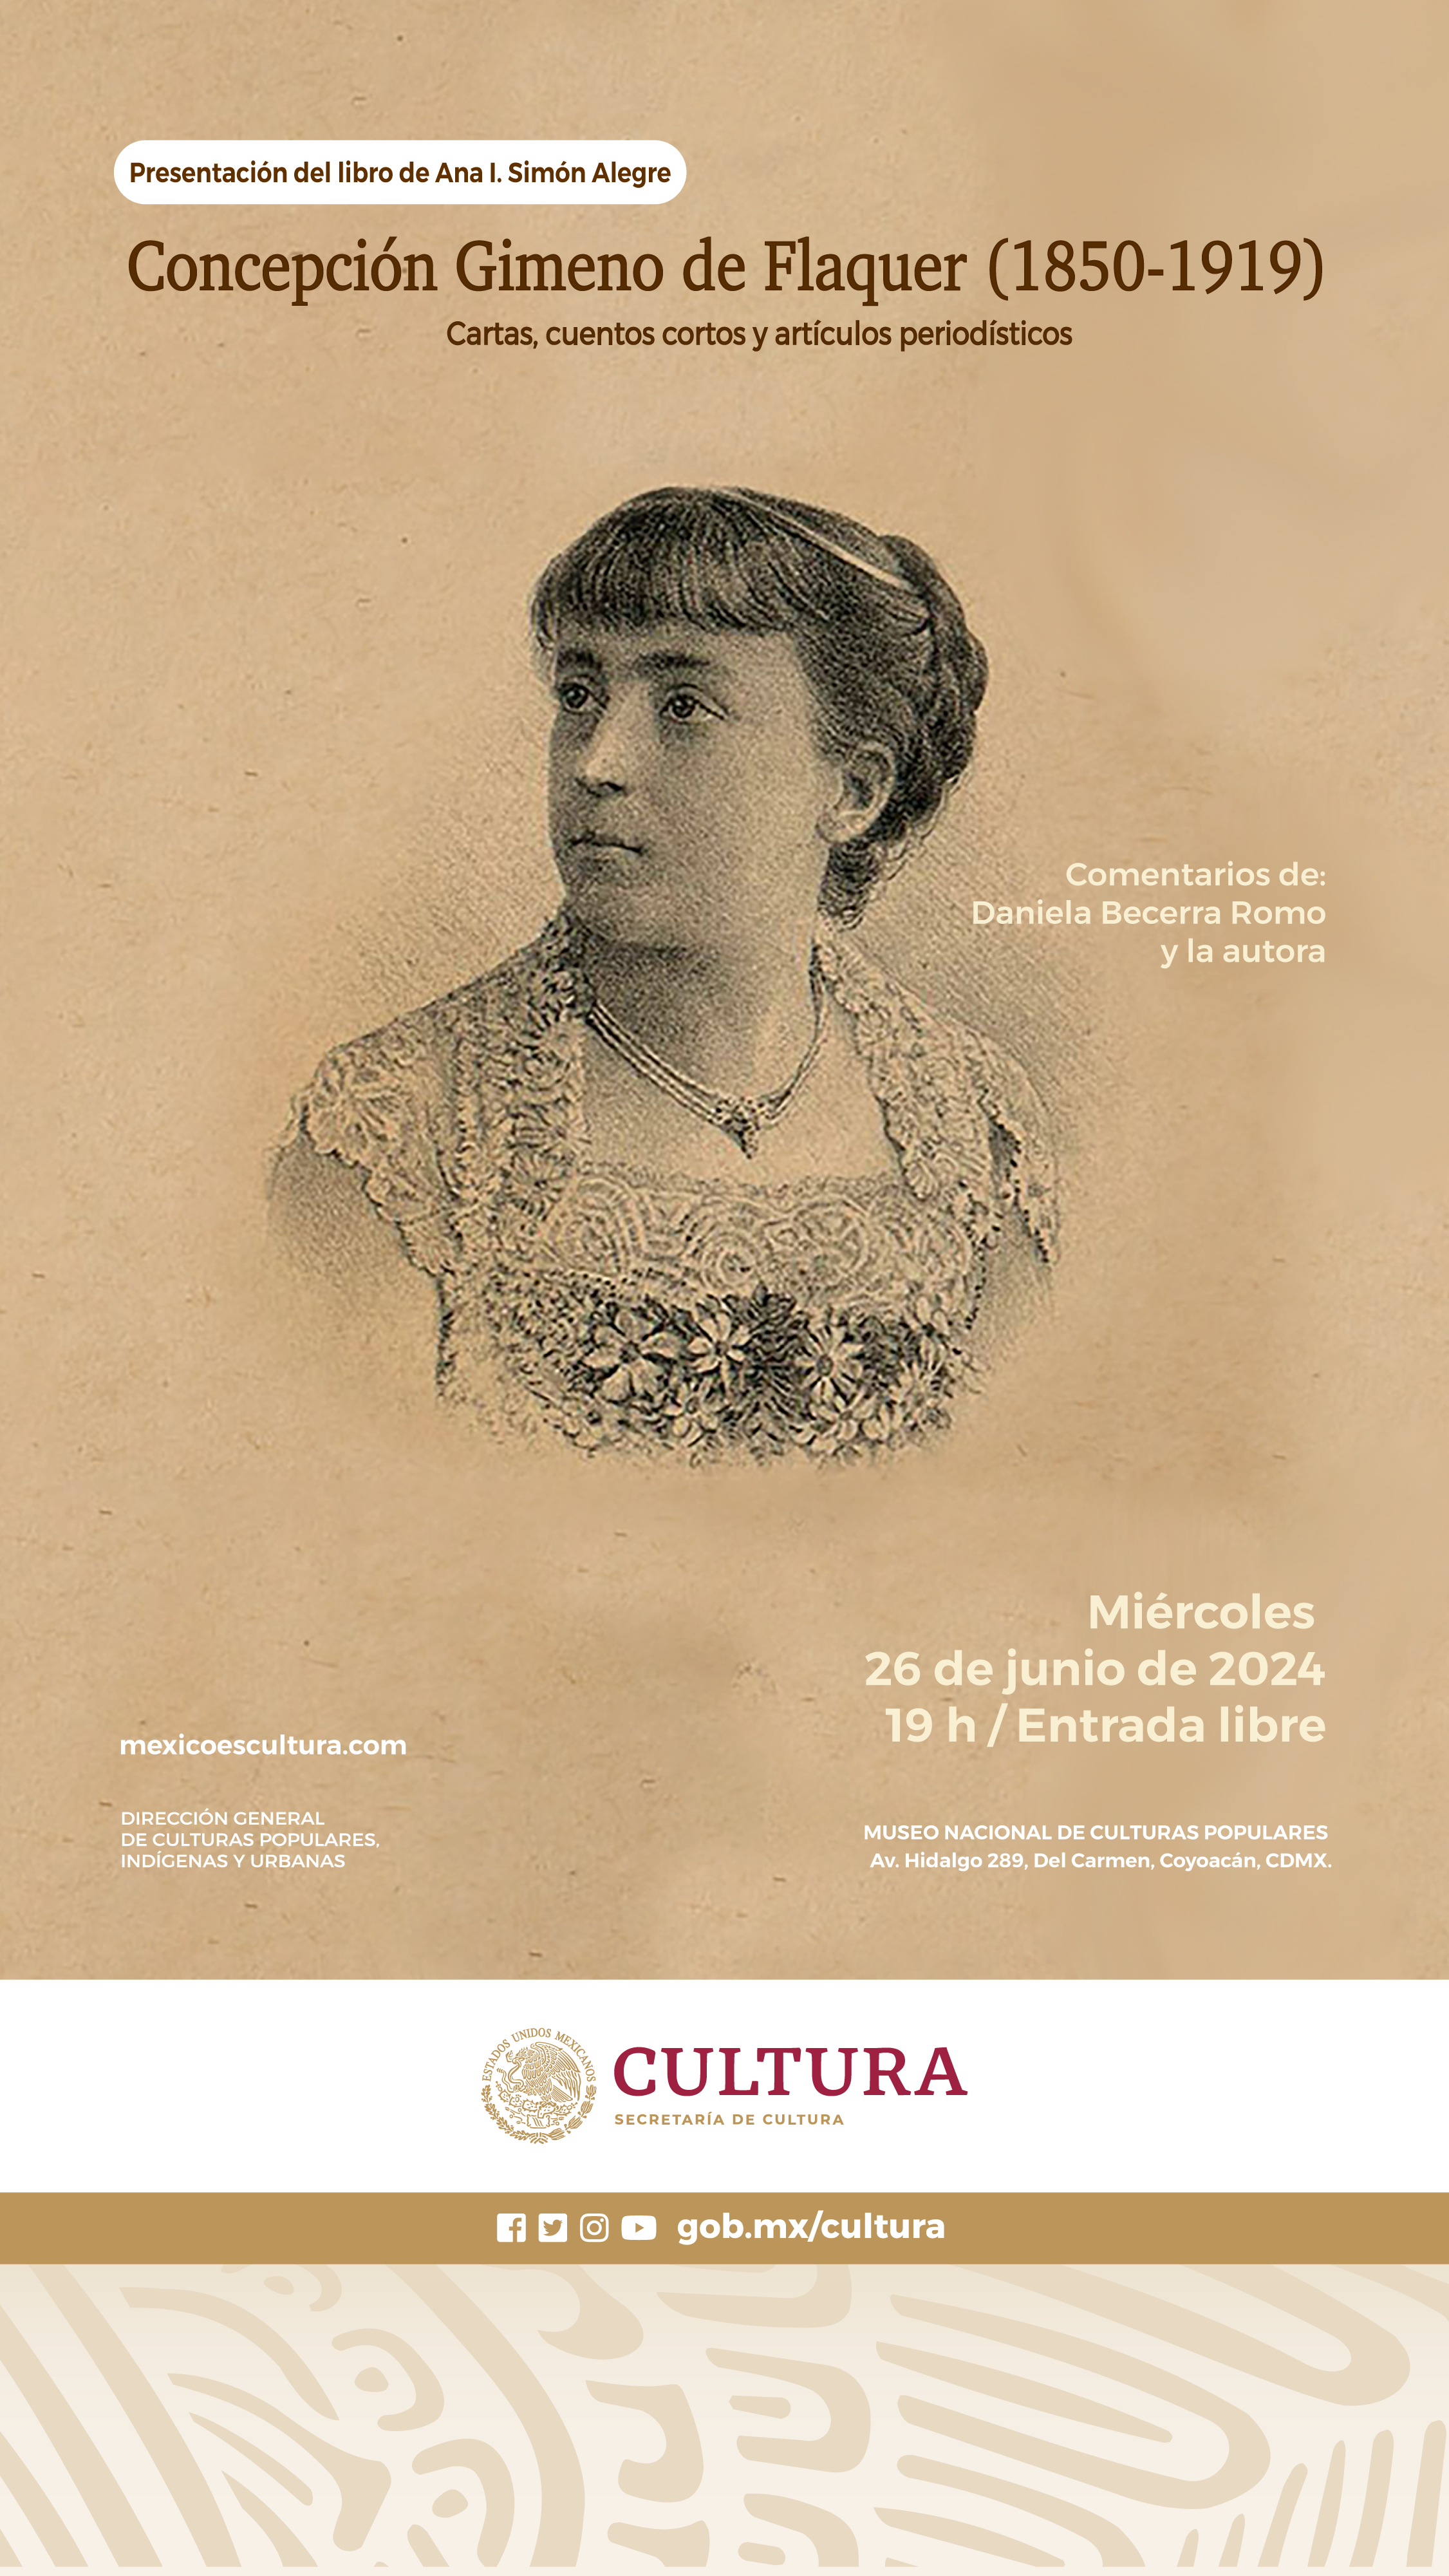 Book Presentation: Concepción Gimeno de Flaquer's Literary Legacy